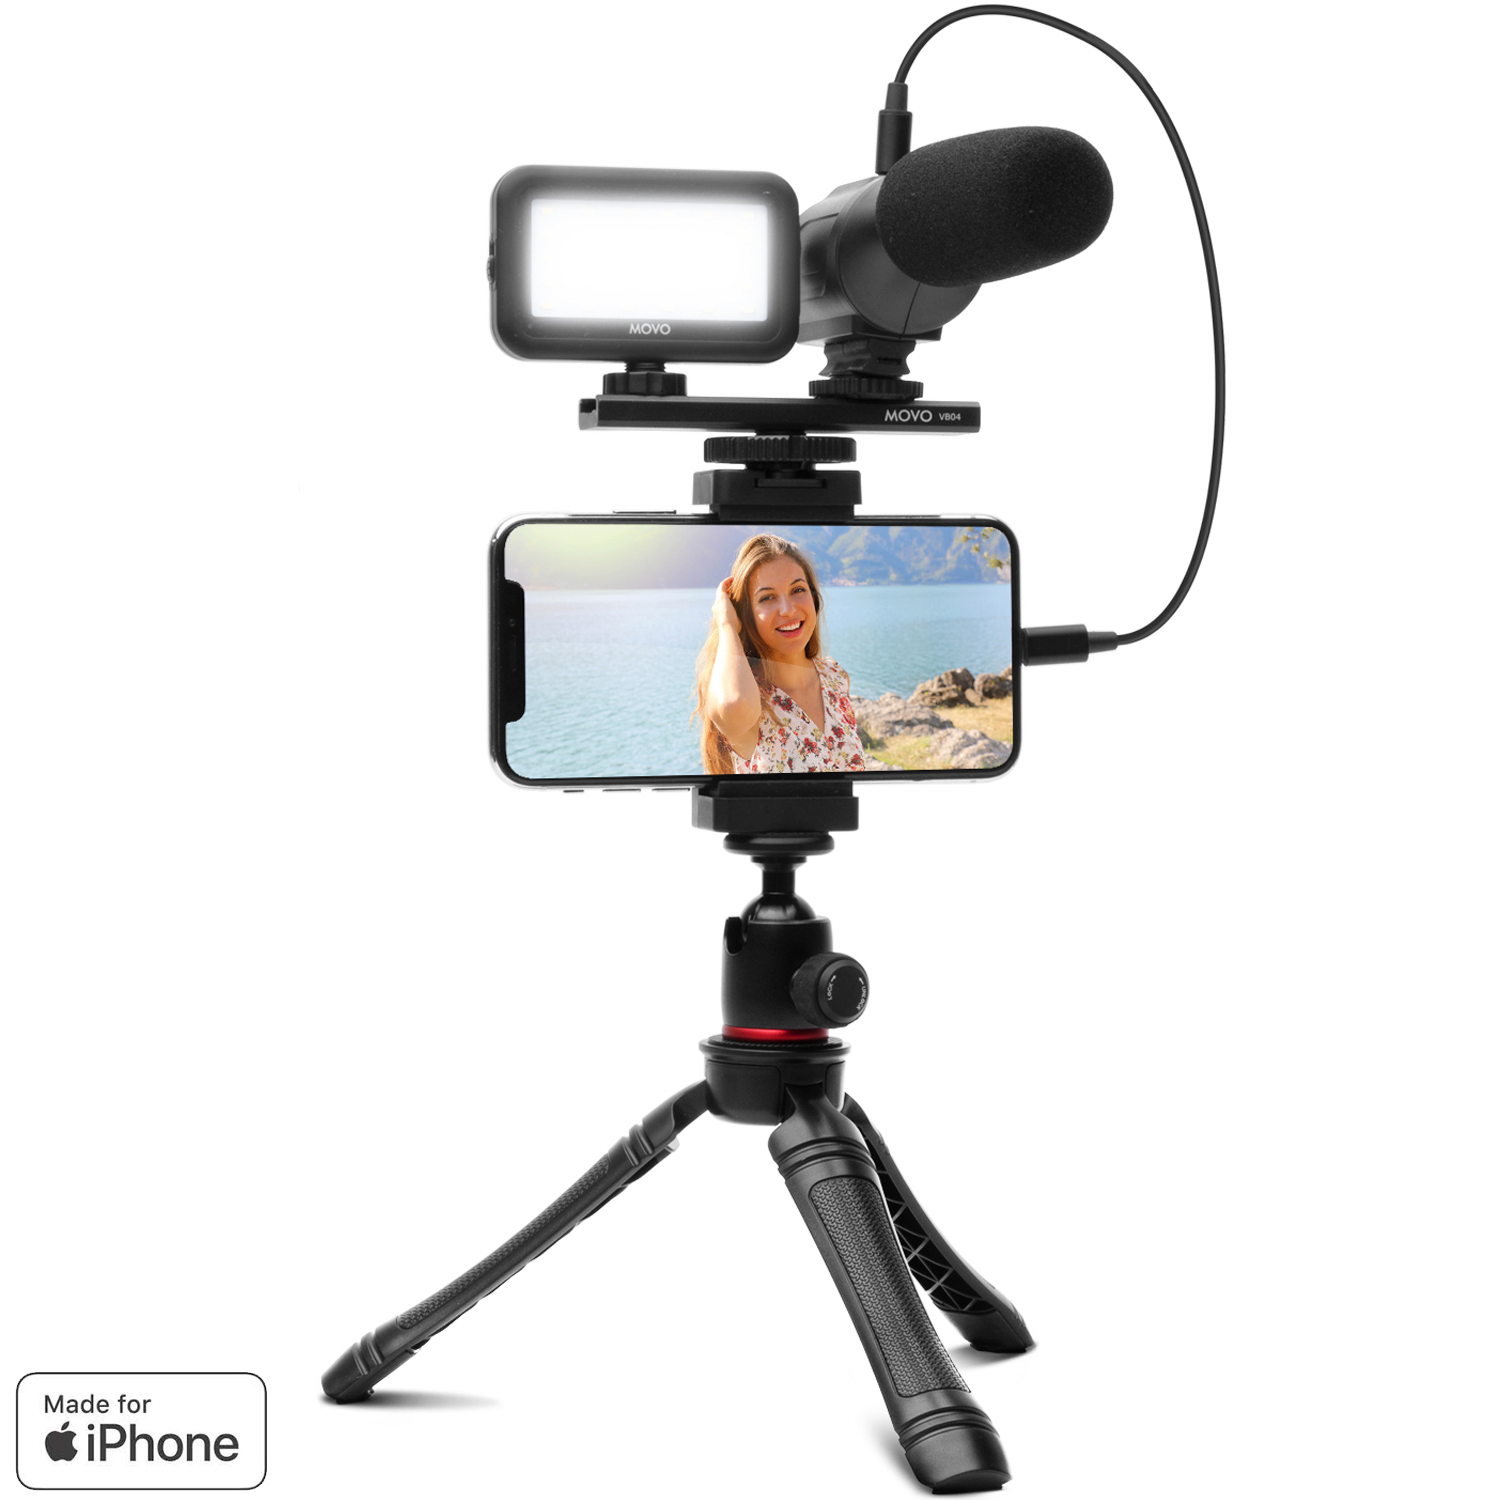 Overvloedig Pakket Prestatie Smartphone Video Kit W/ Tripod, Mic, Light, More | iVlogger | Movo